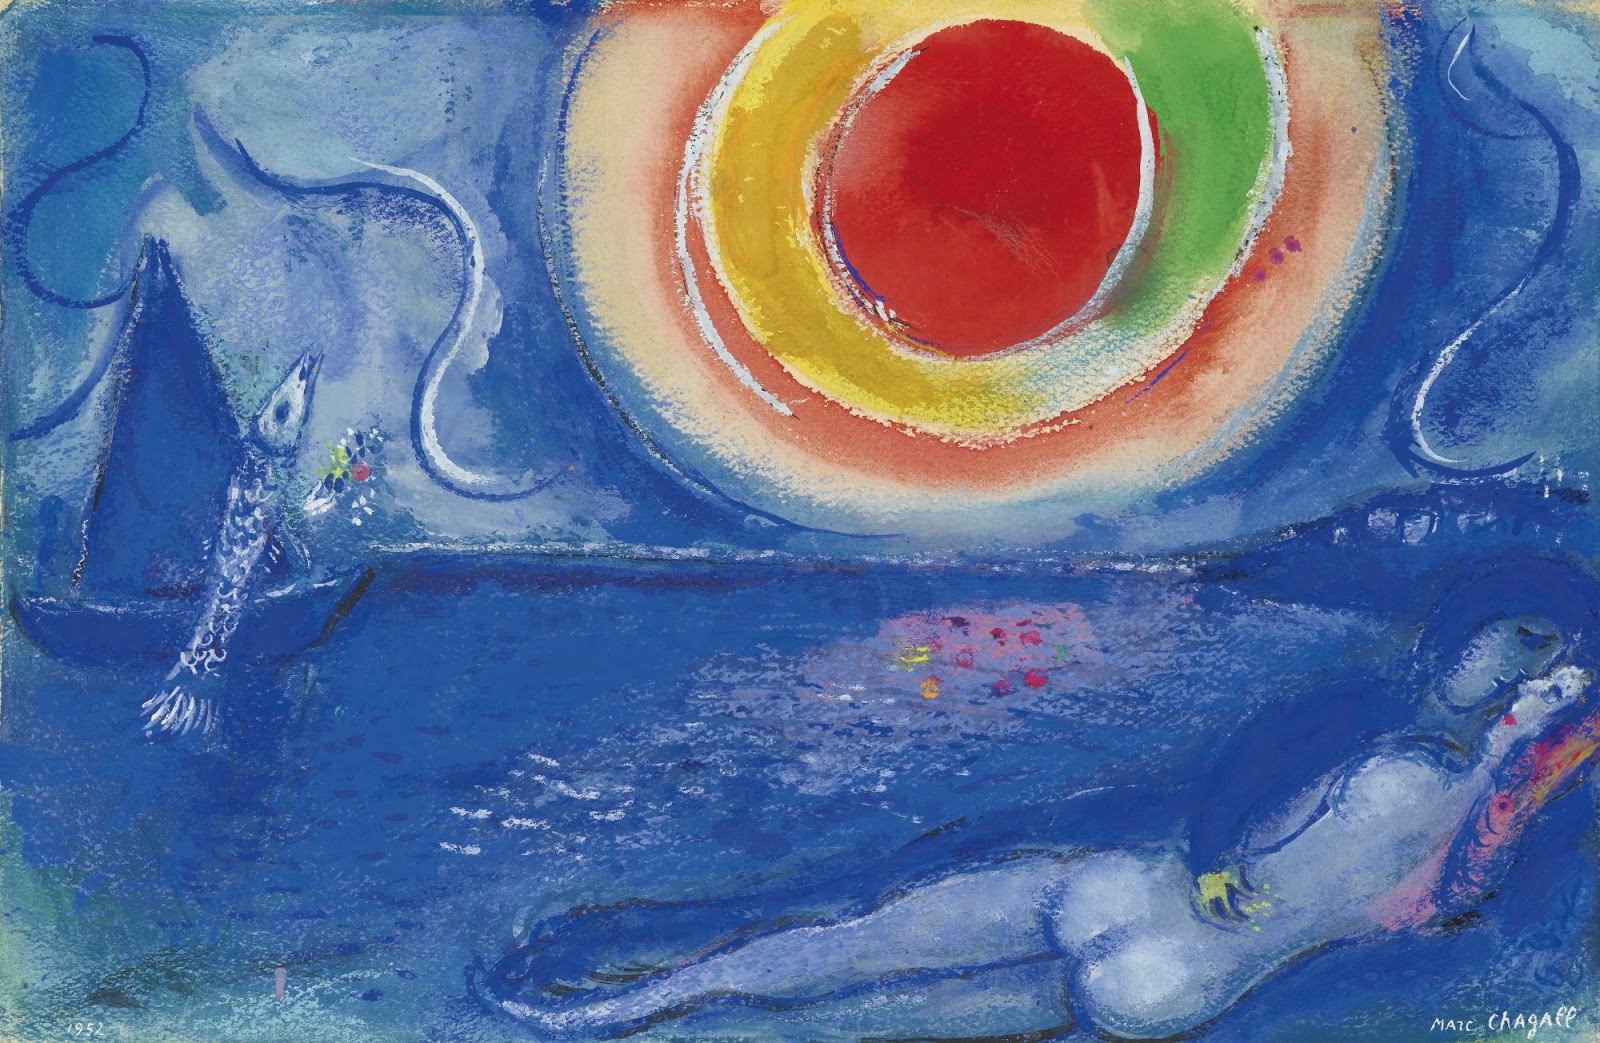 Marc+Chagall-1887-1985 (396).jpg